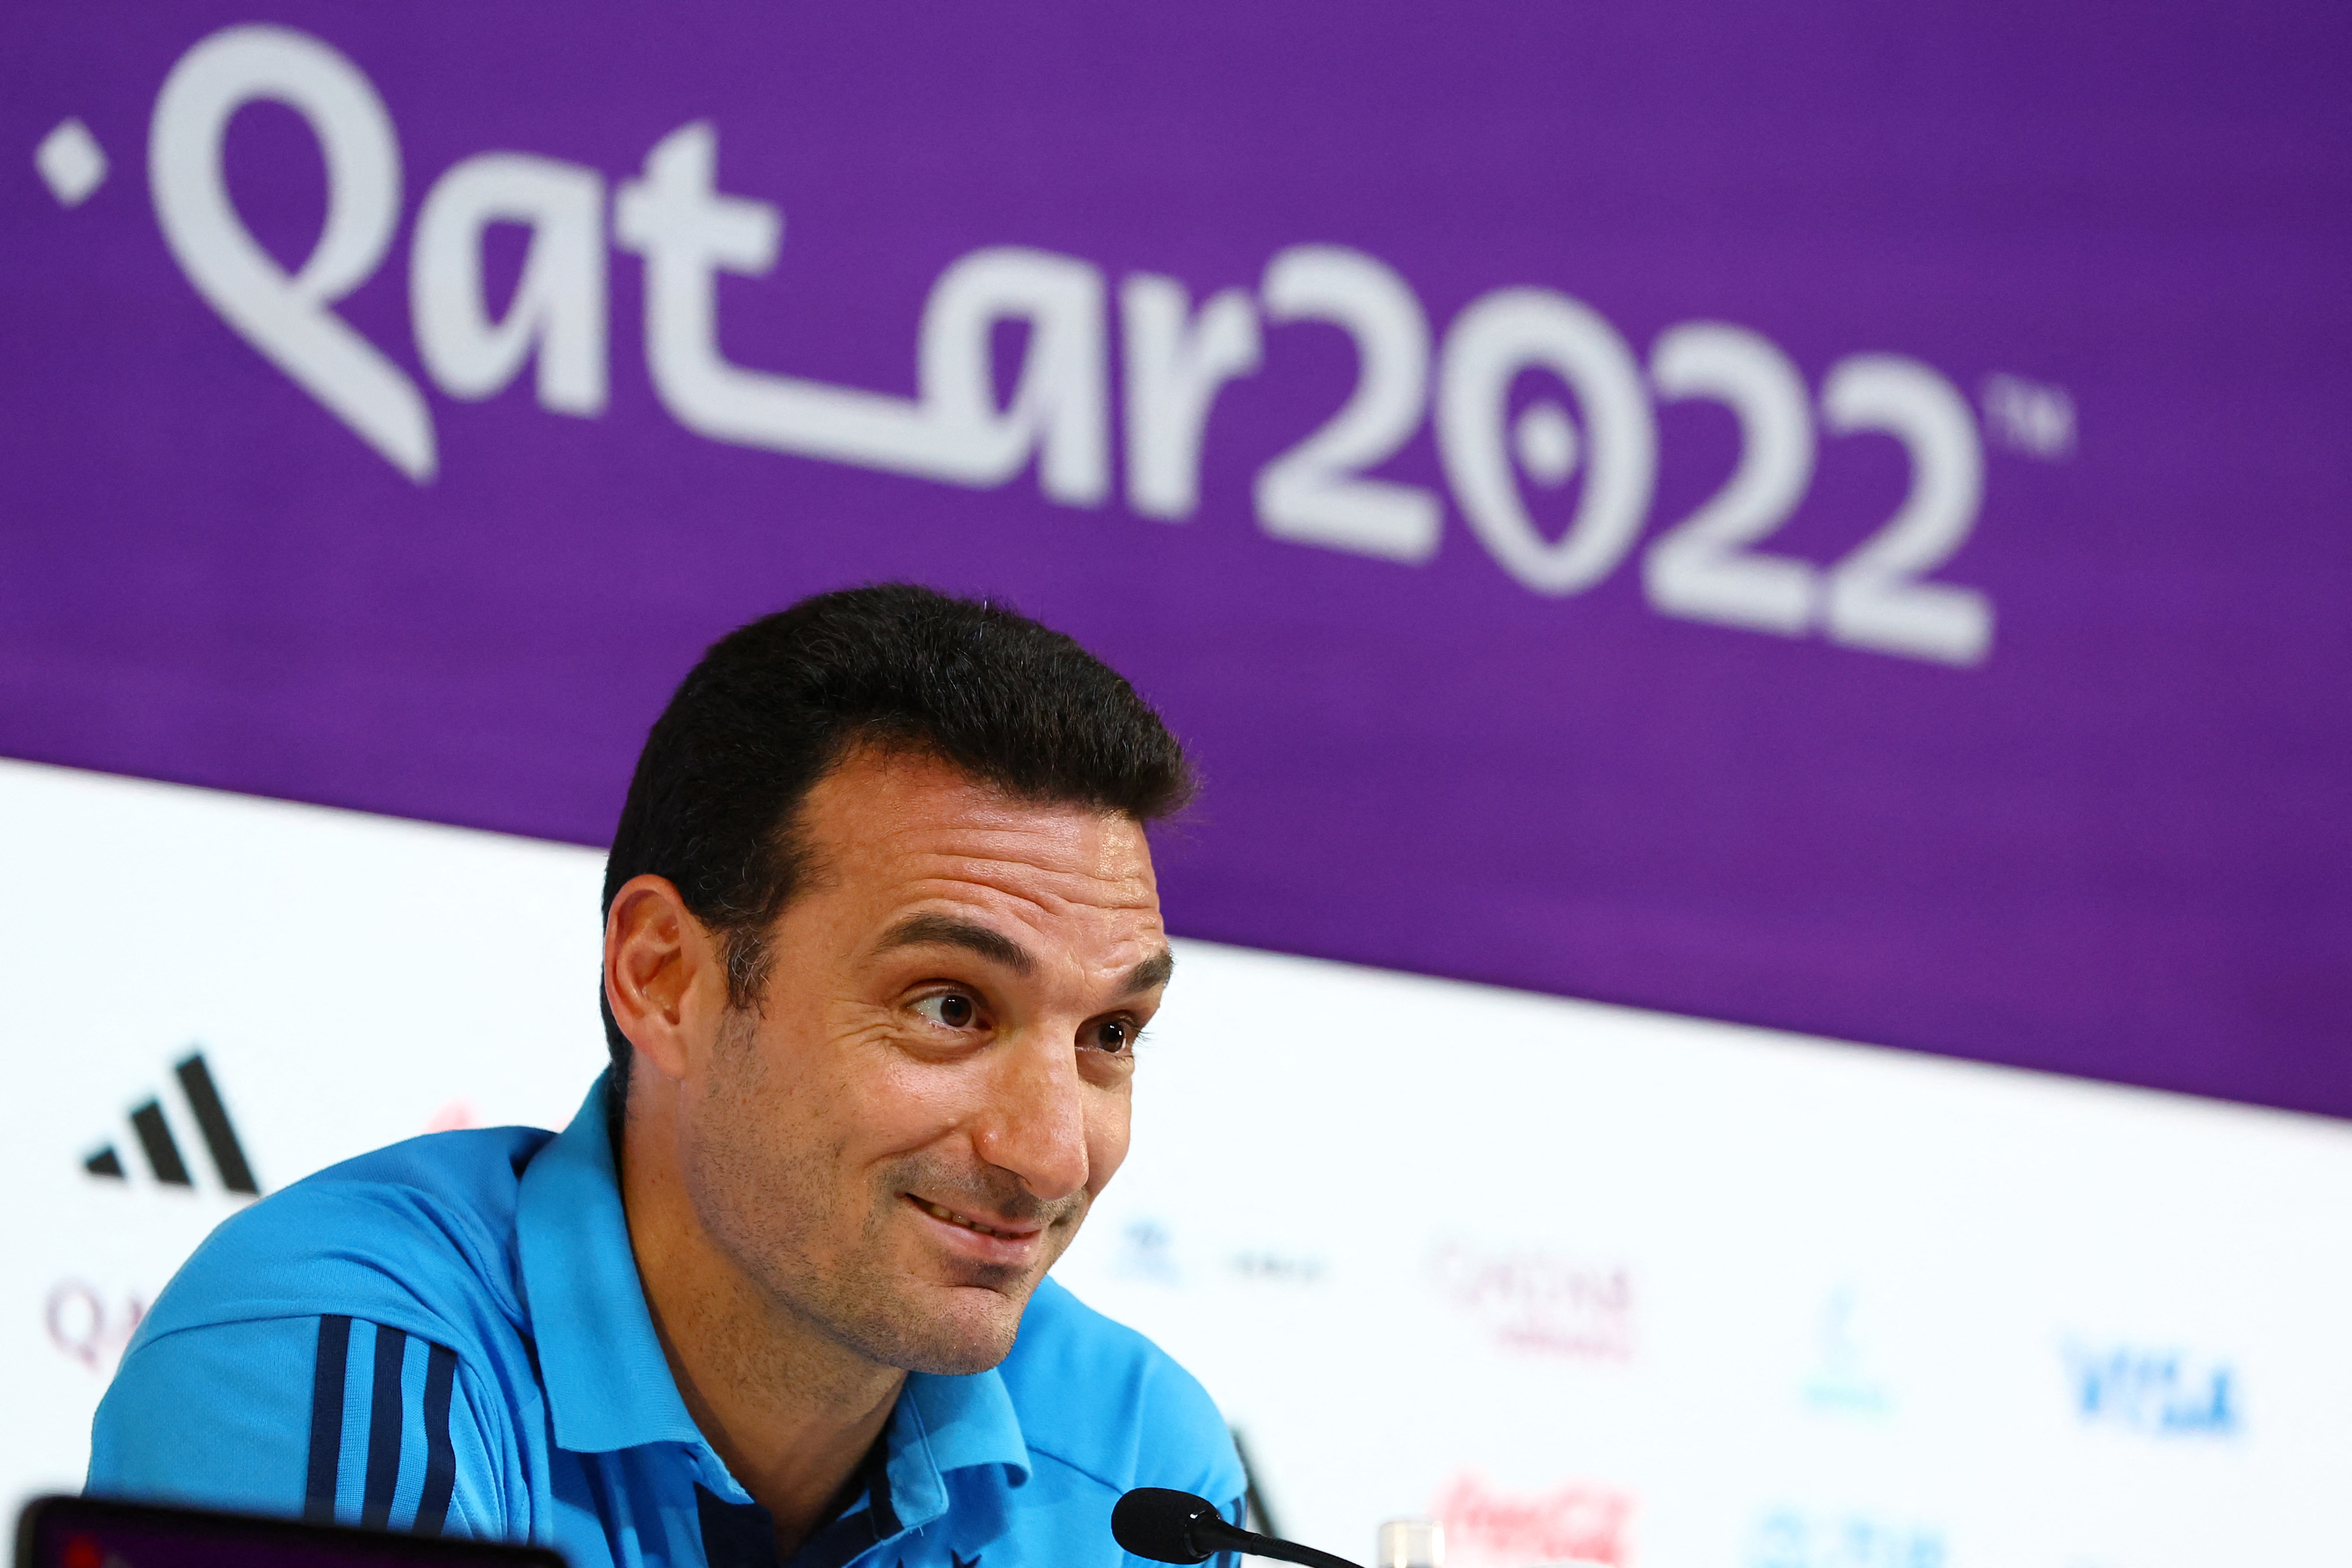 FIFA World Cup Qatar 2022 - Argentina Press Conference